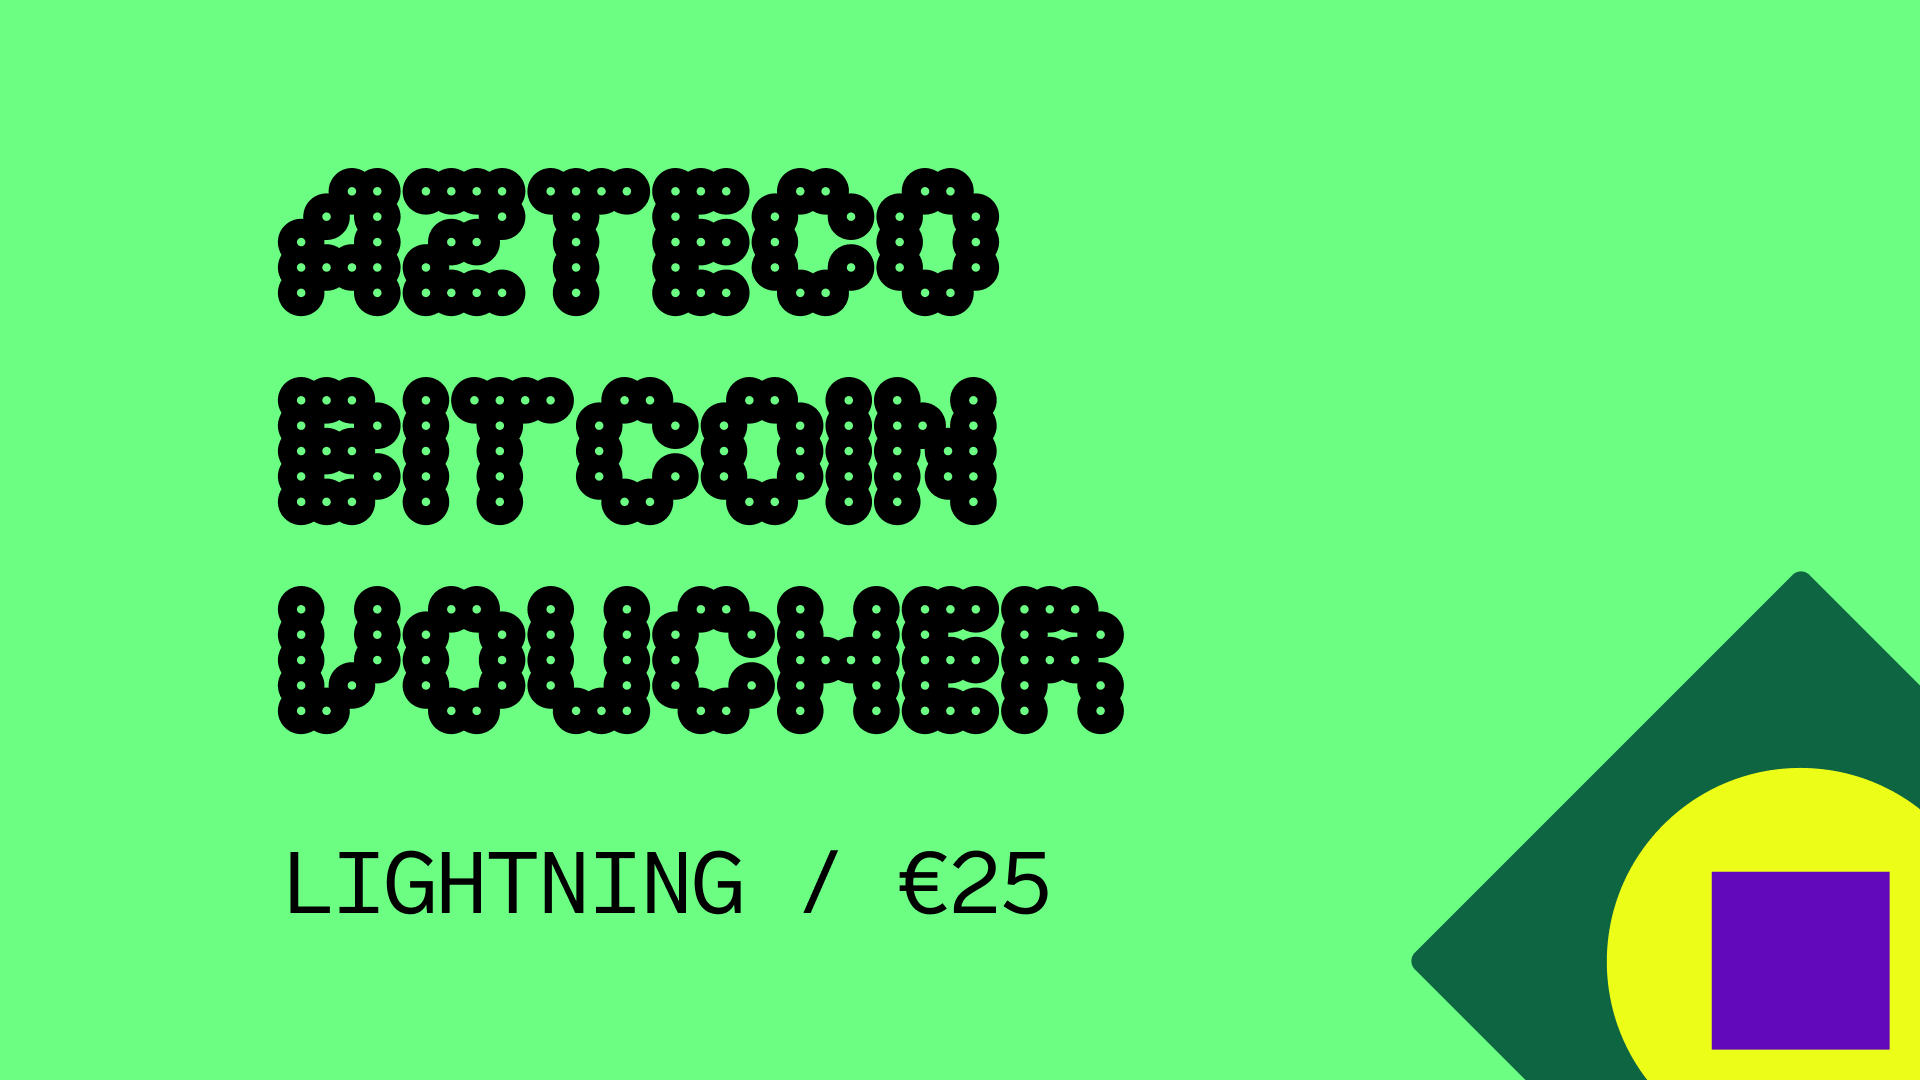 Azteco Bitcoin Lighting €25 Voucher, 28.25$